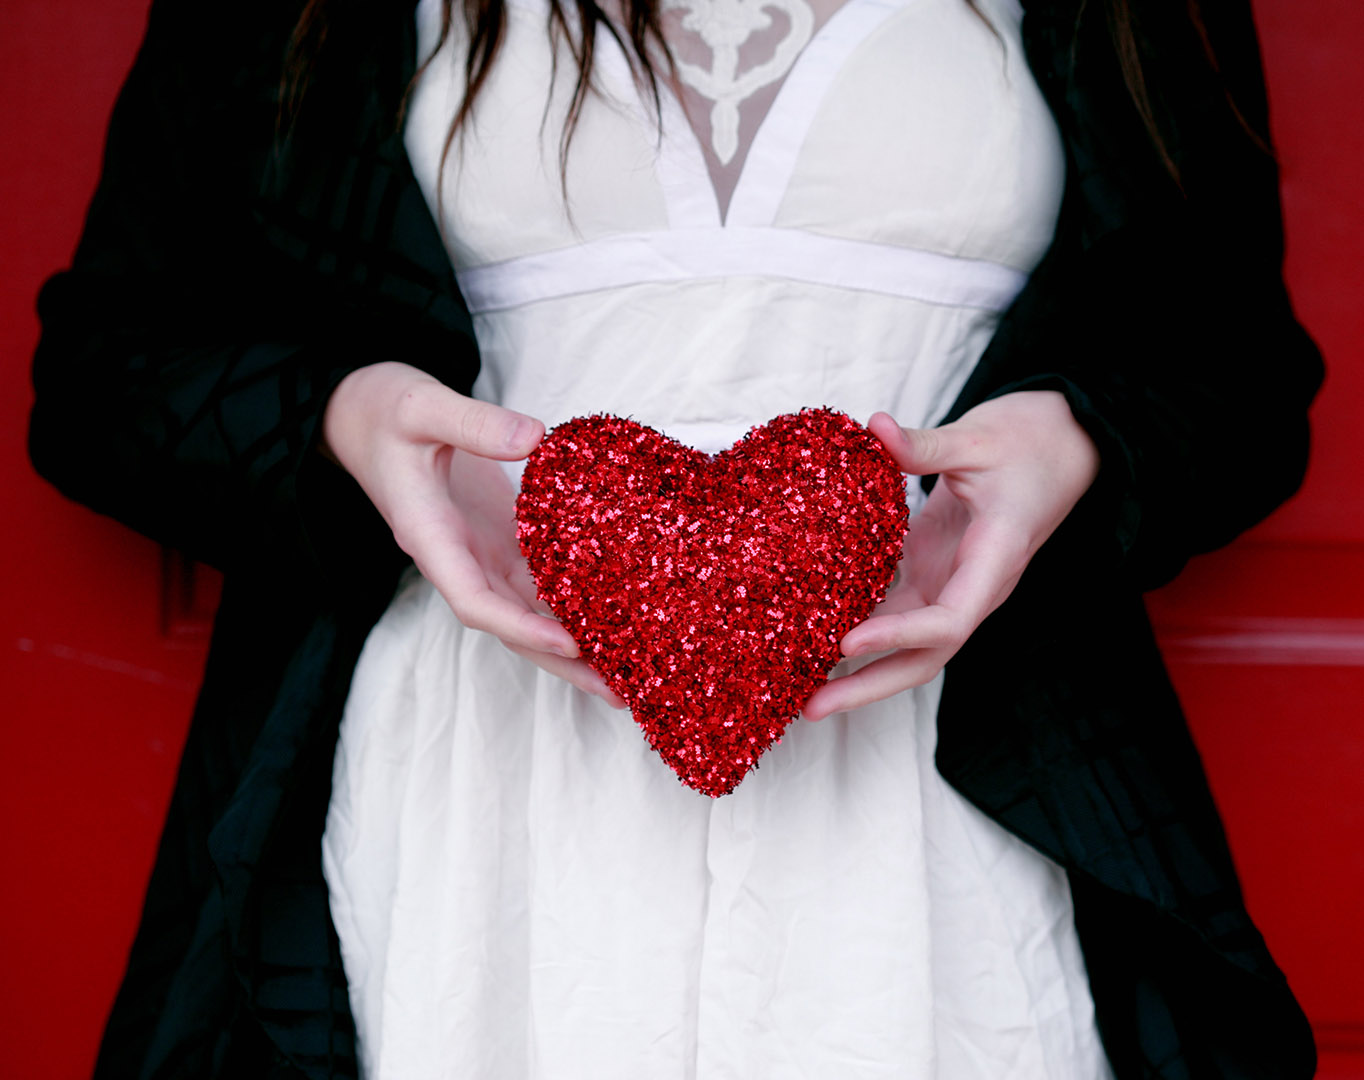 a woman wearing a dress holding a heart shaped item